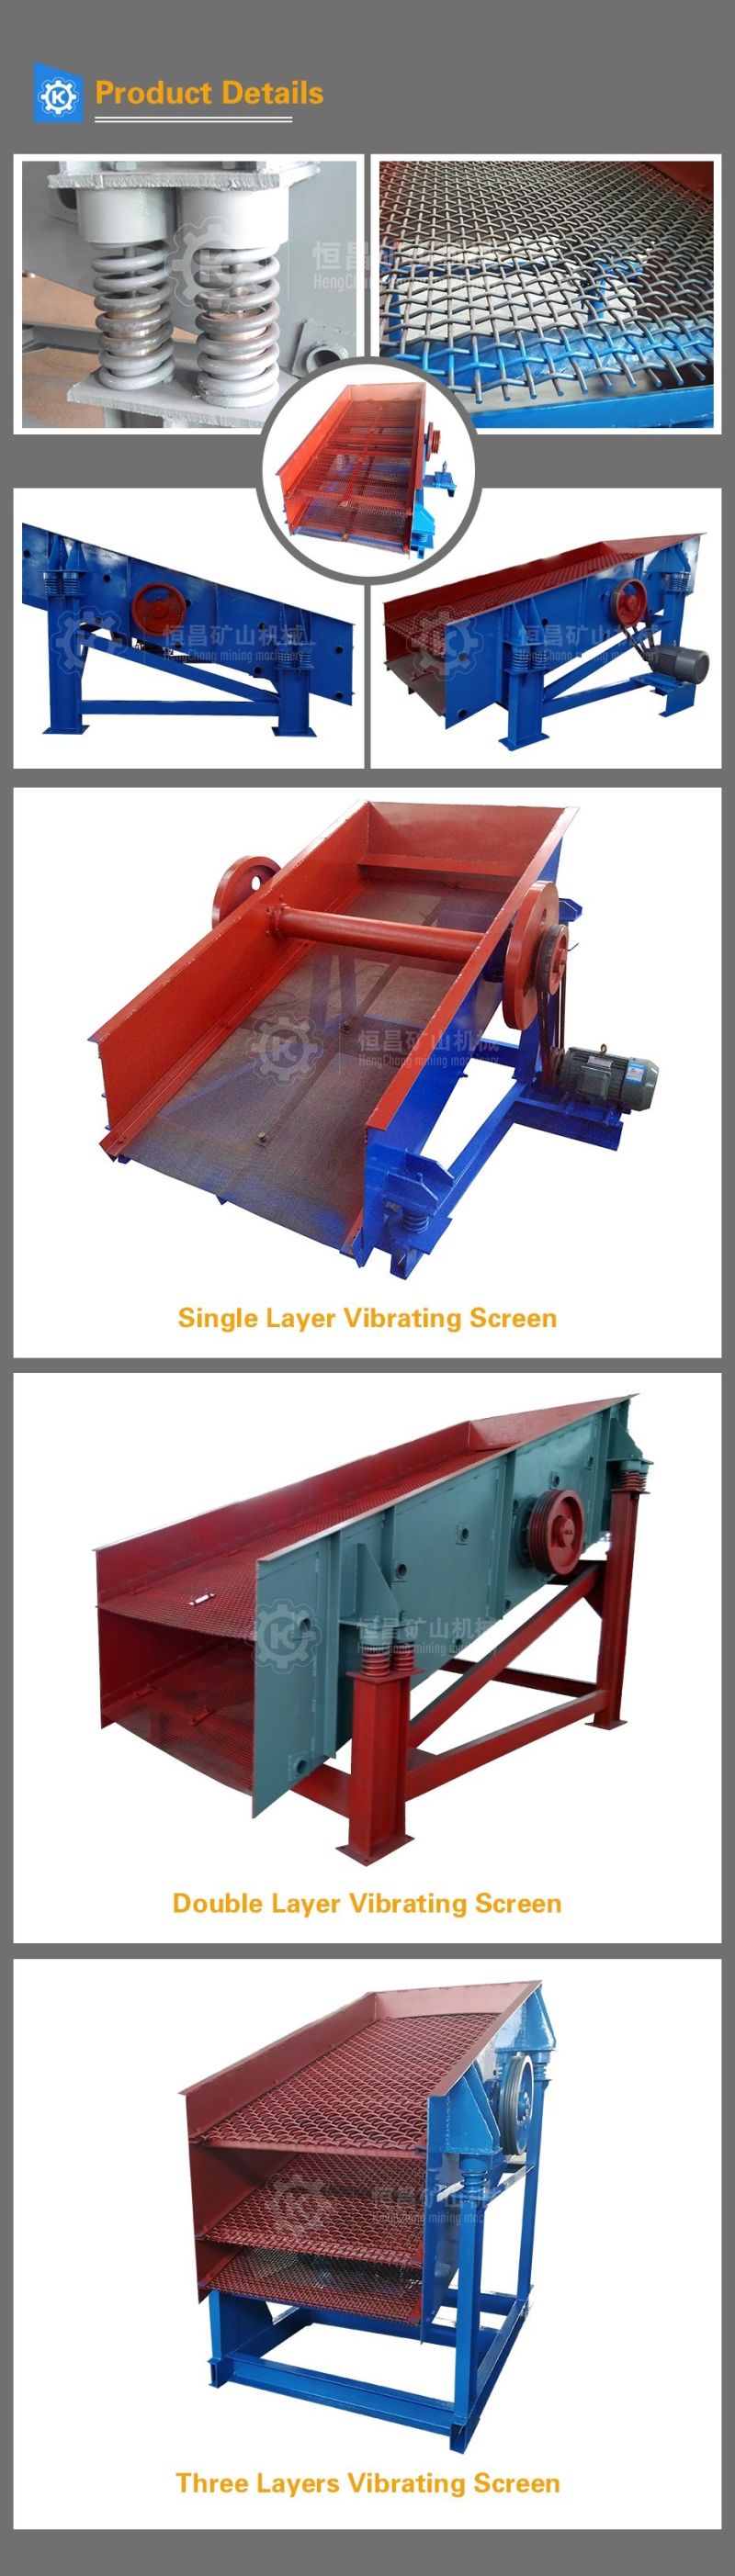 China Screening Machine, Vibrating Screener, Single Deck Vibrating Screen